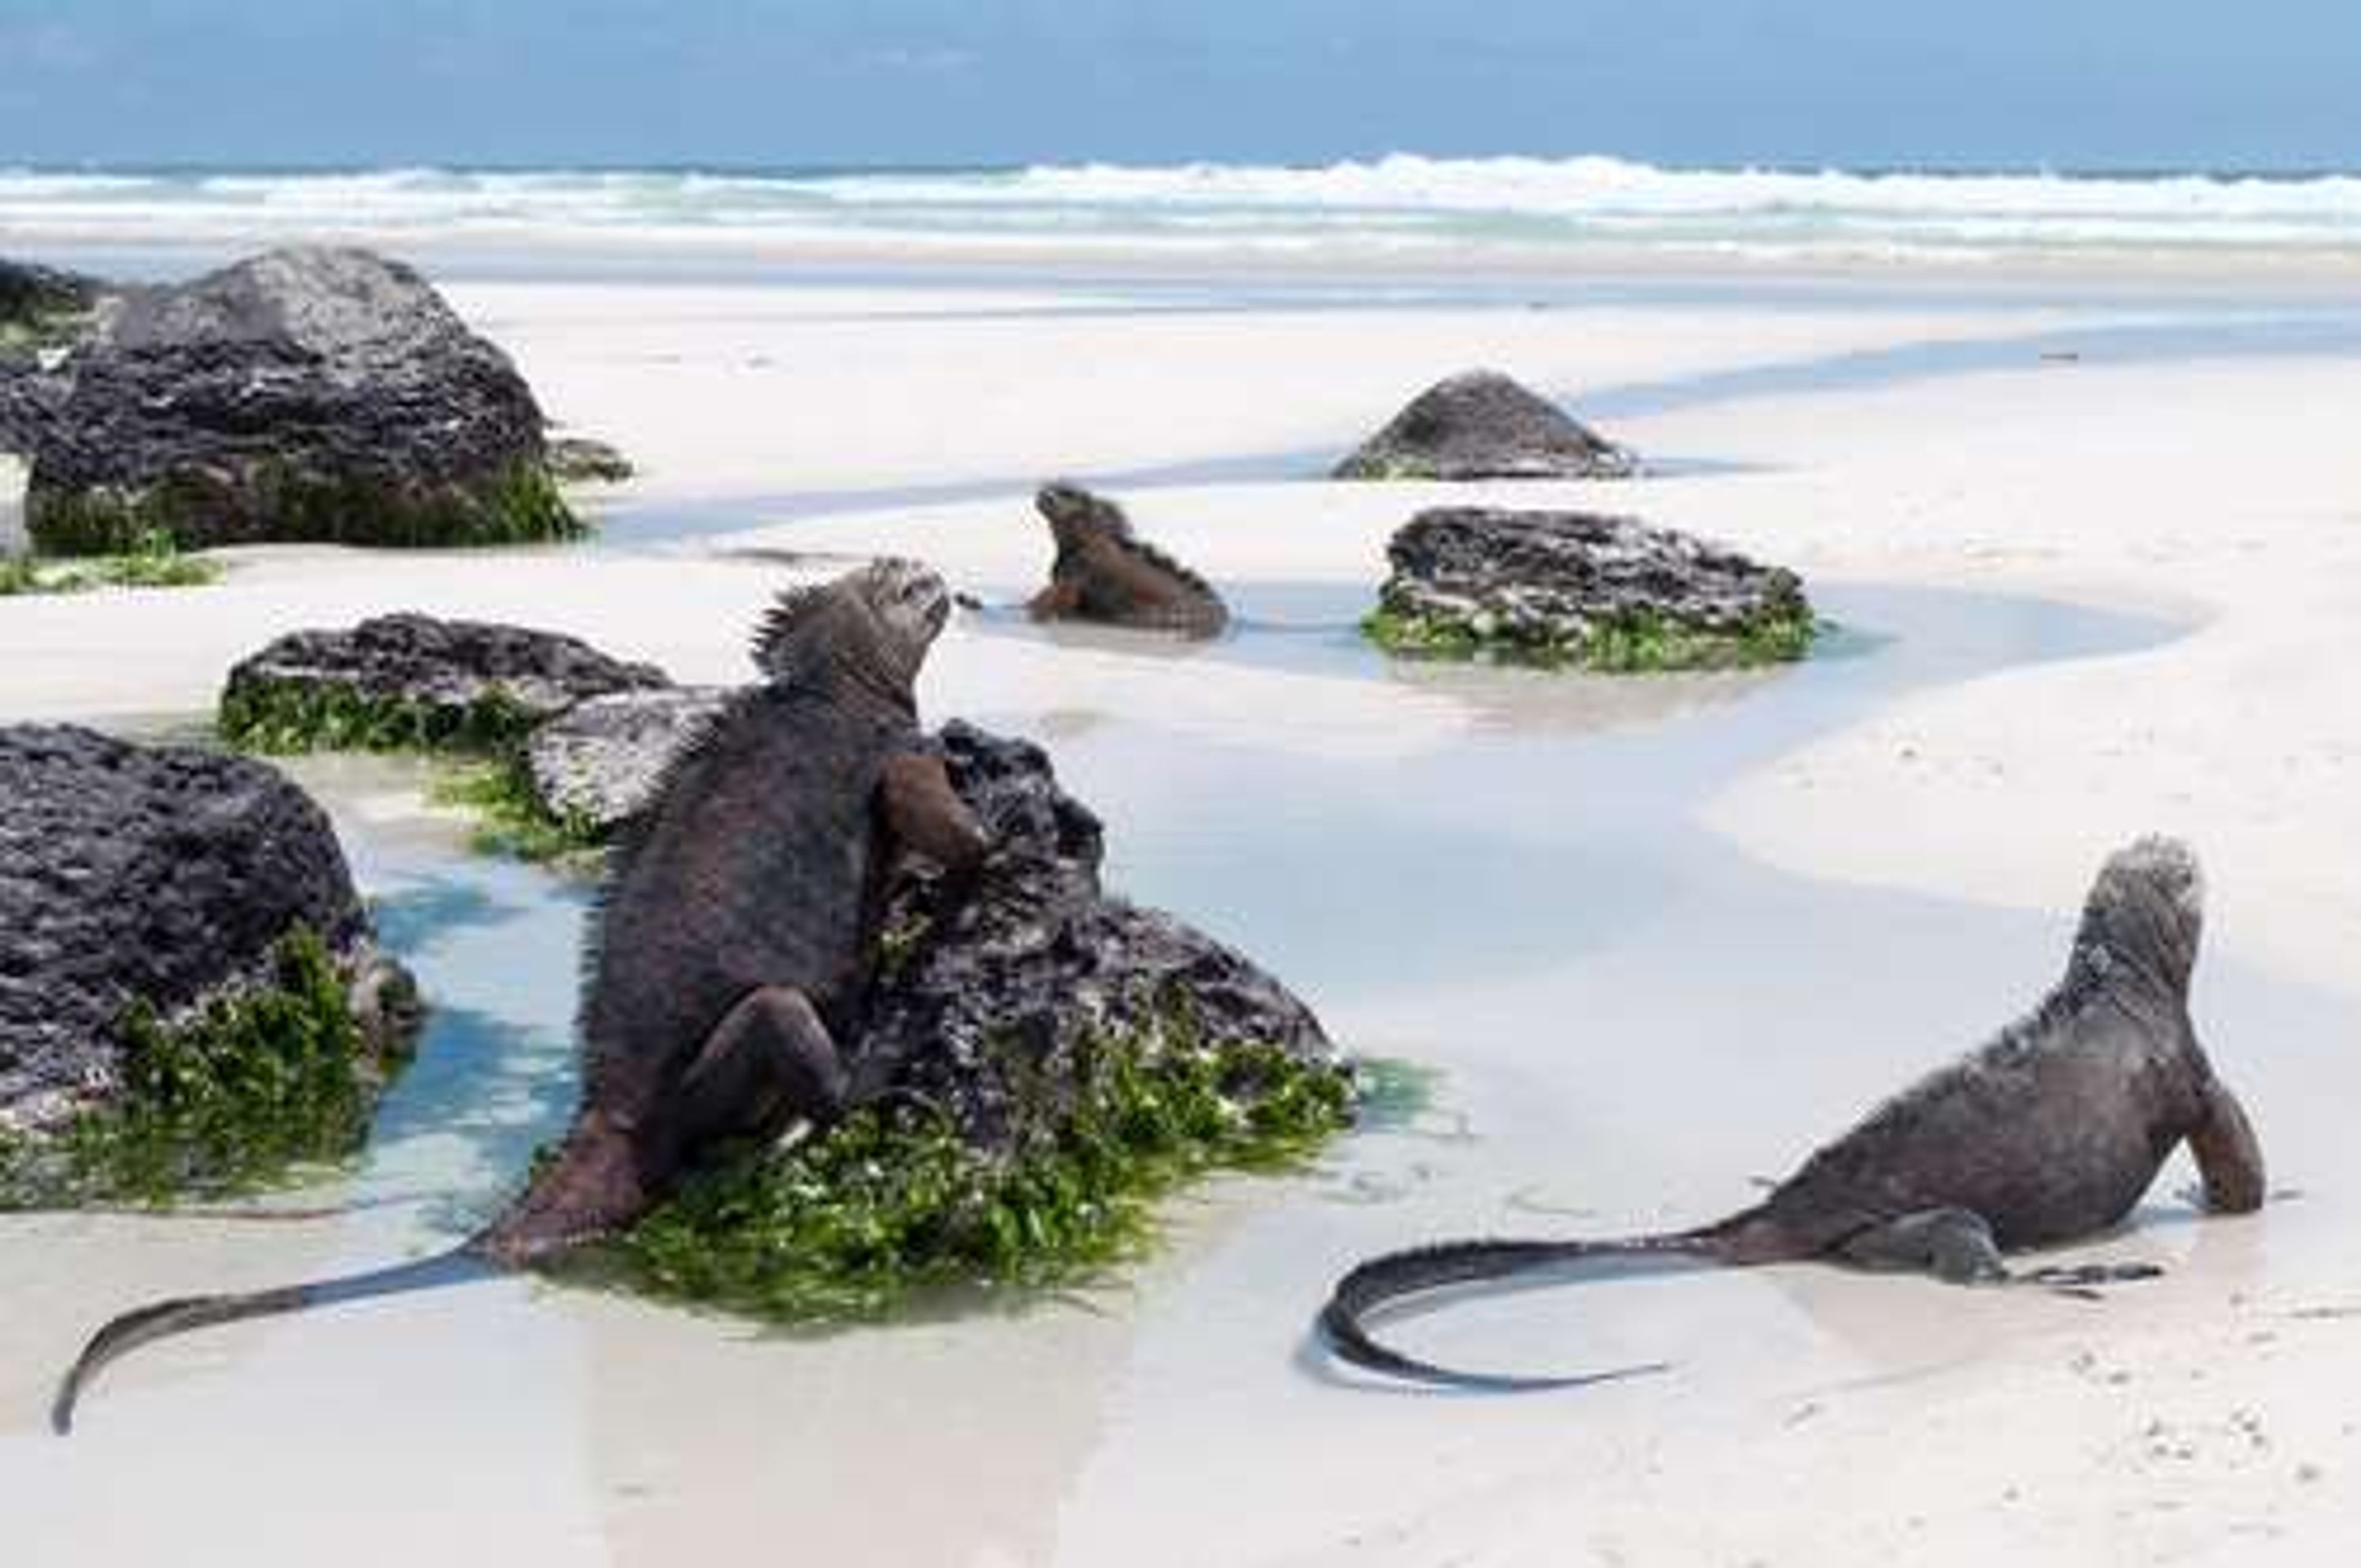 Ecuador Galapagos Santa cruz island Tortuga bay Marine Iguanas on a beach